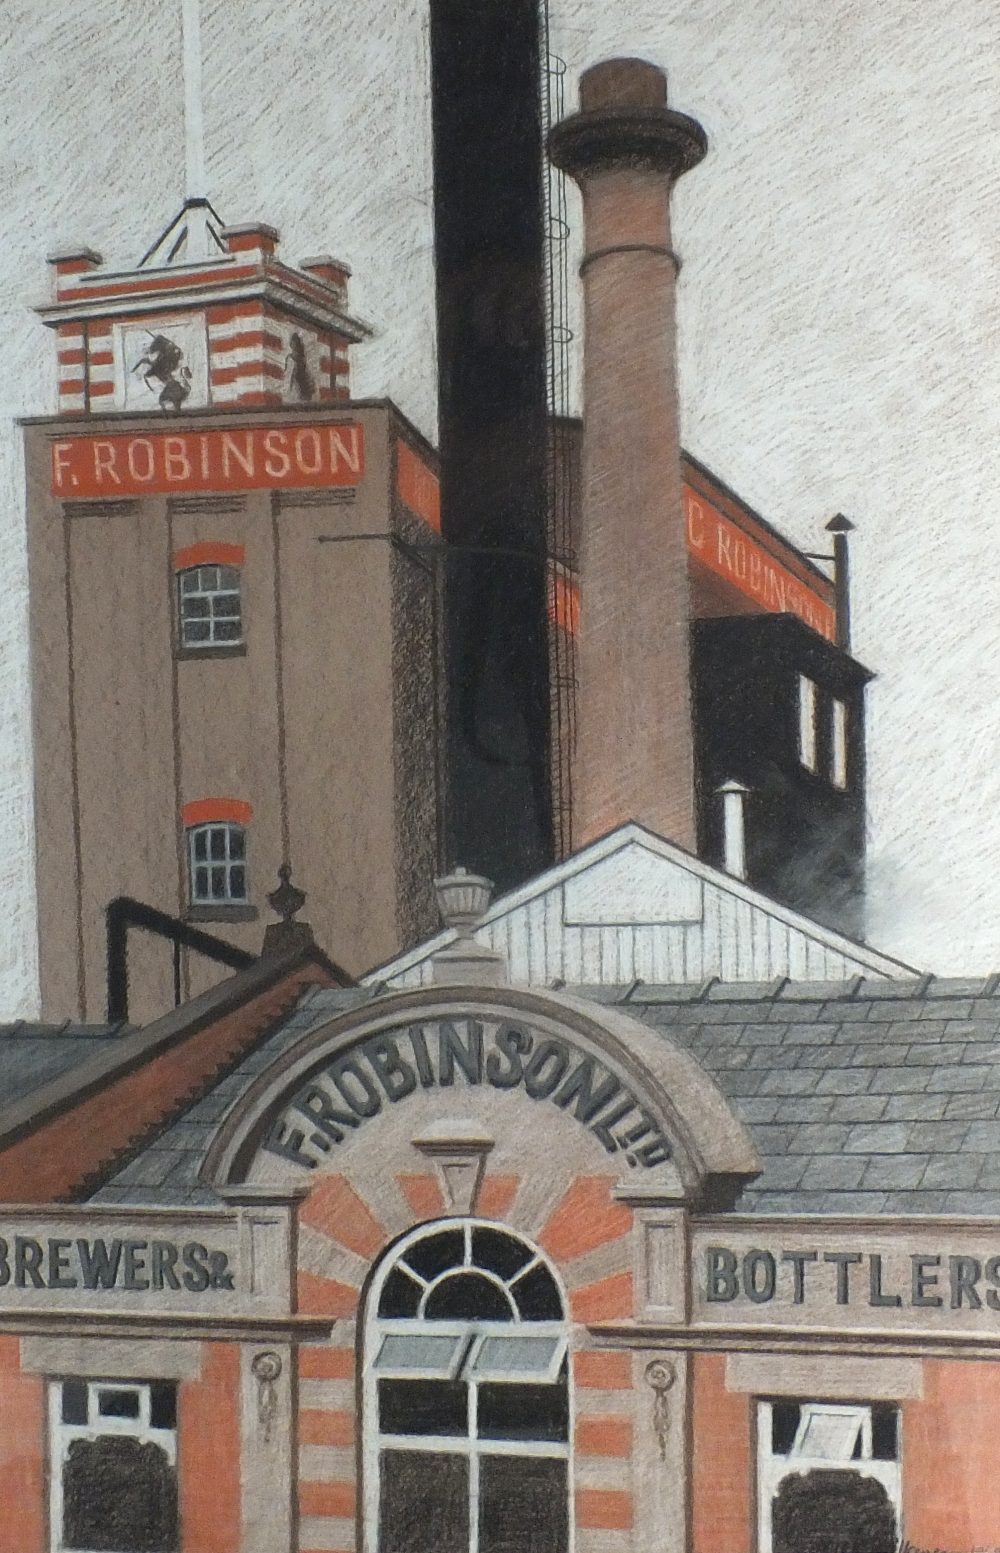 Nick Wilkinson (British school, 20th century) F Robinson Ltd, Brewers and Bottlers,